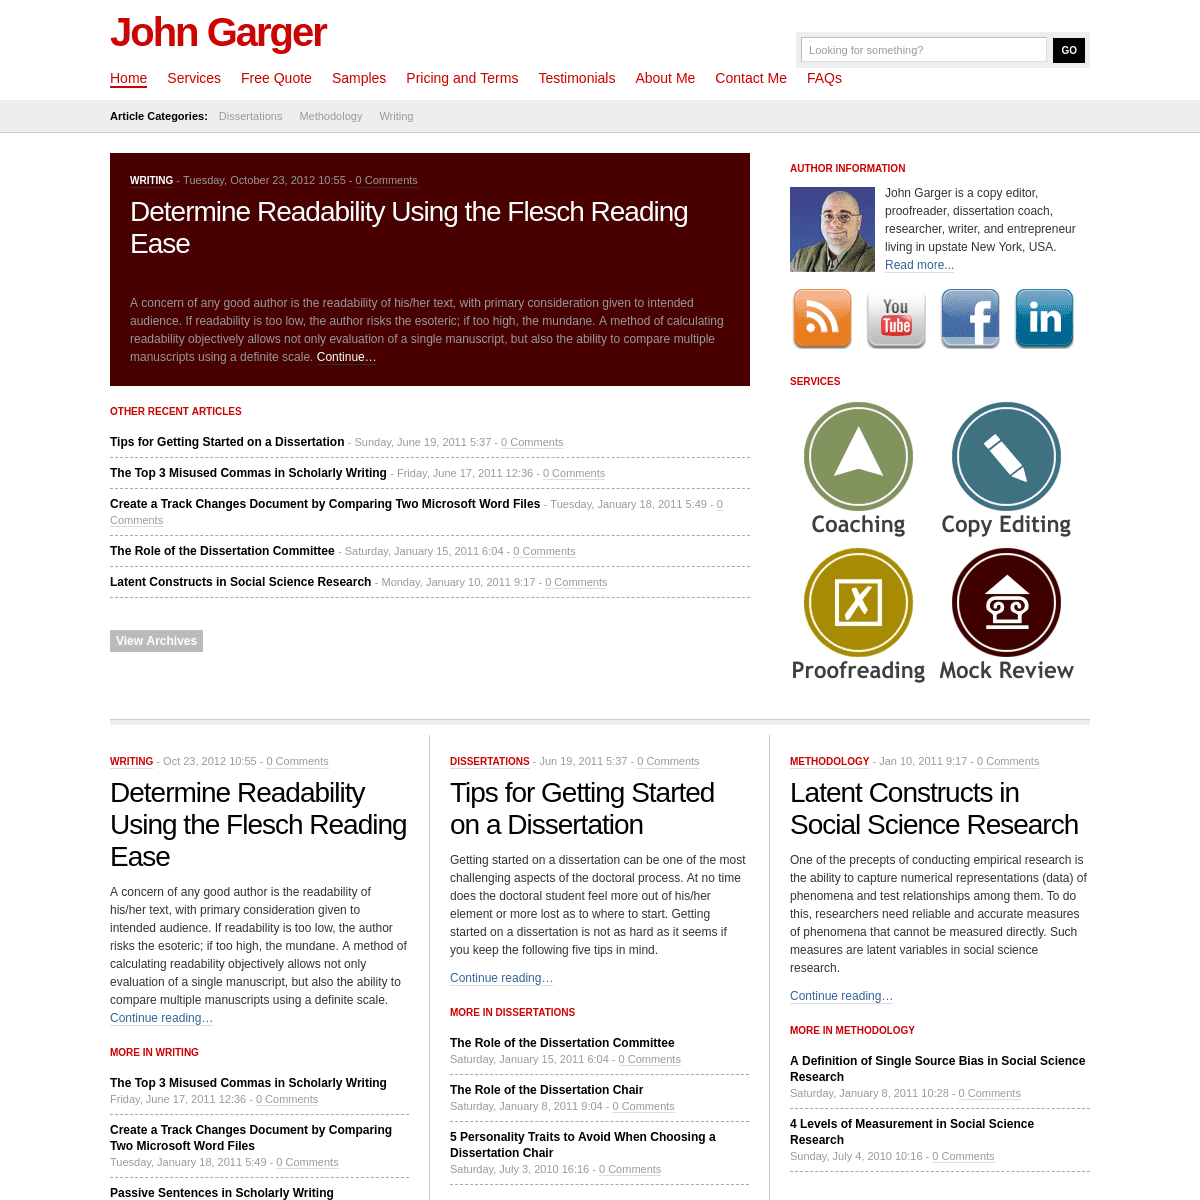 A complete backup of johngarger.com